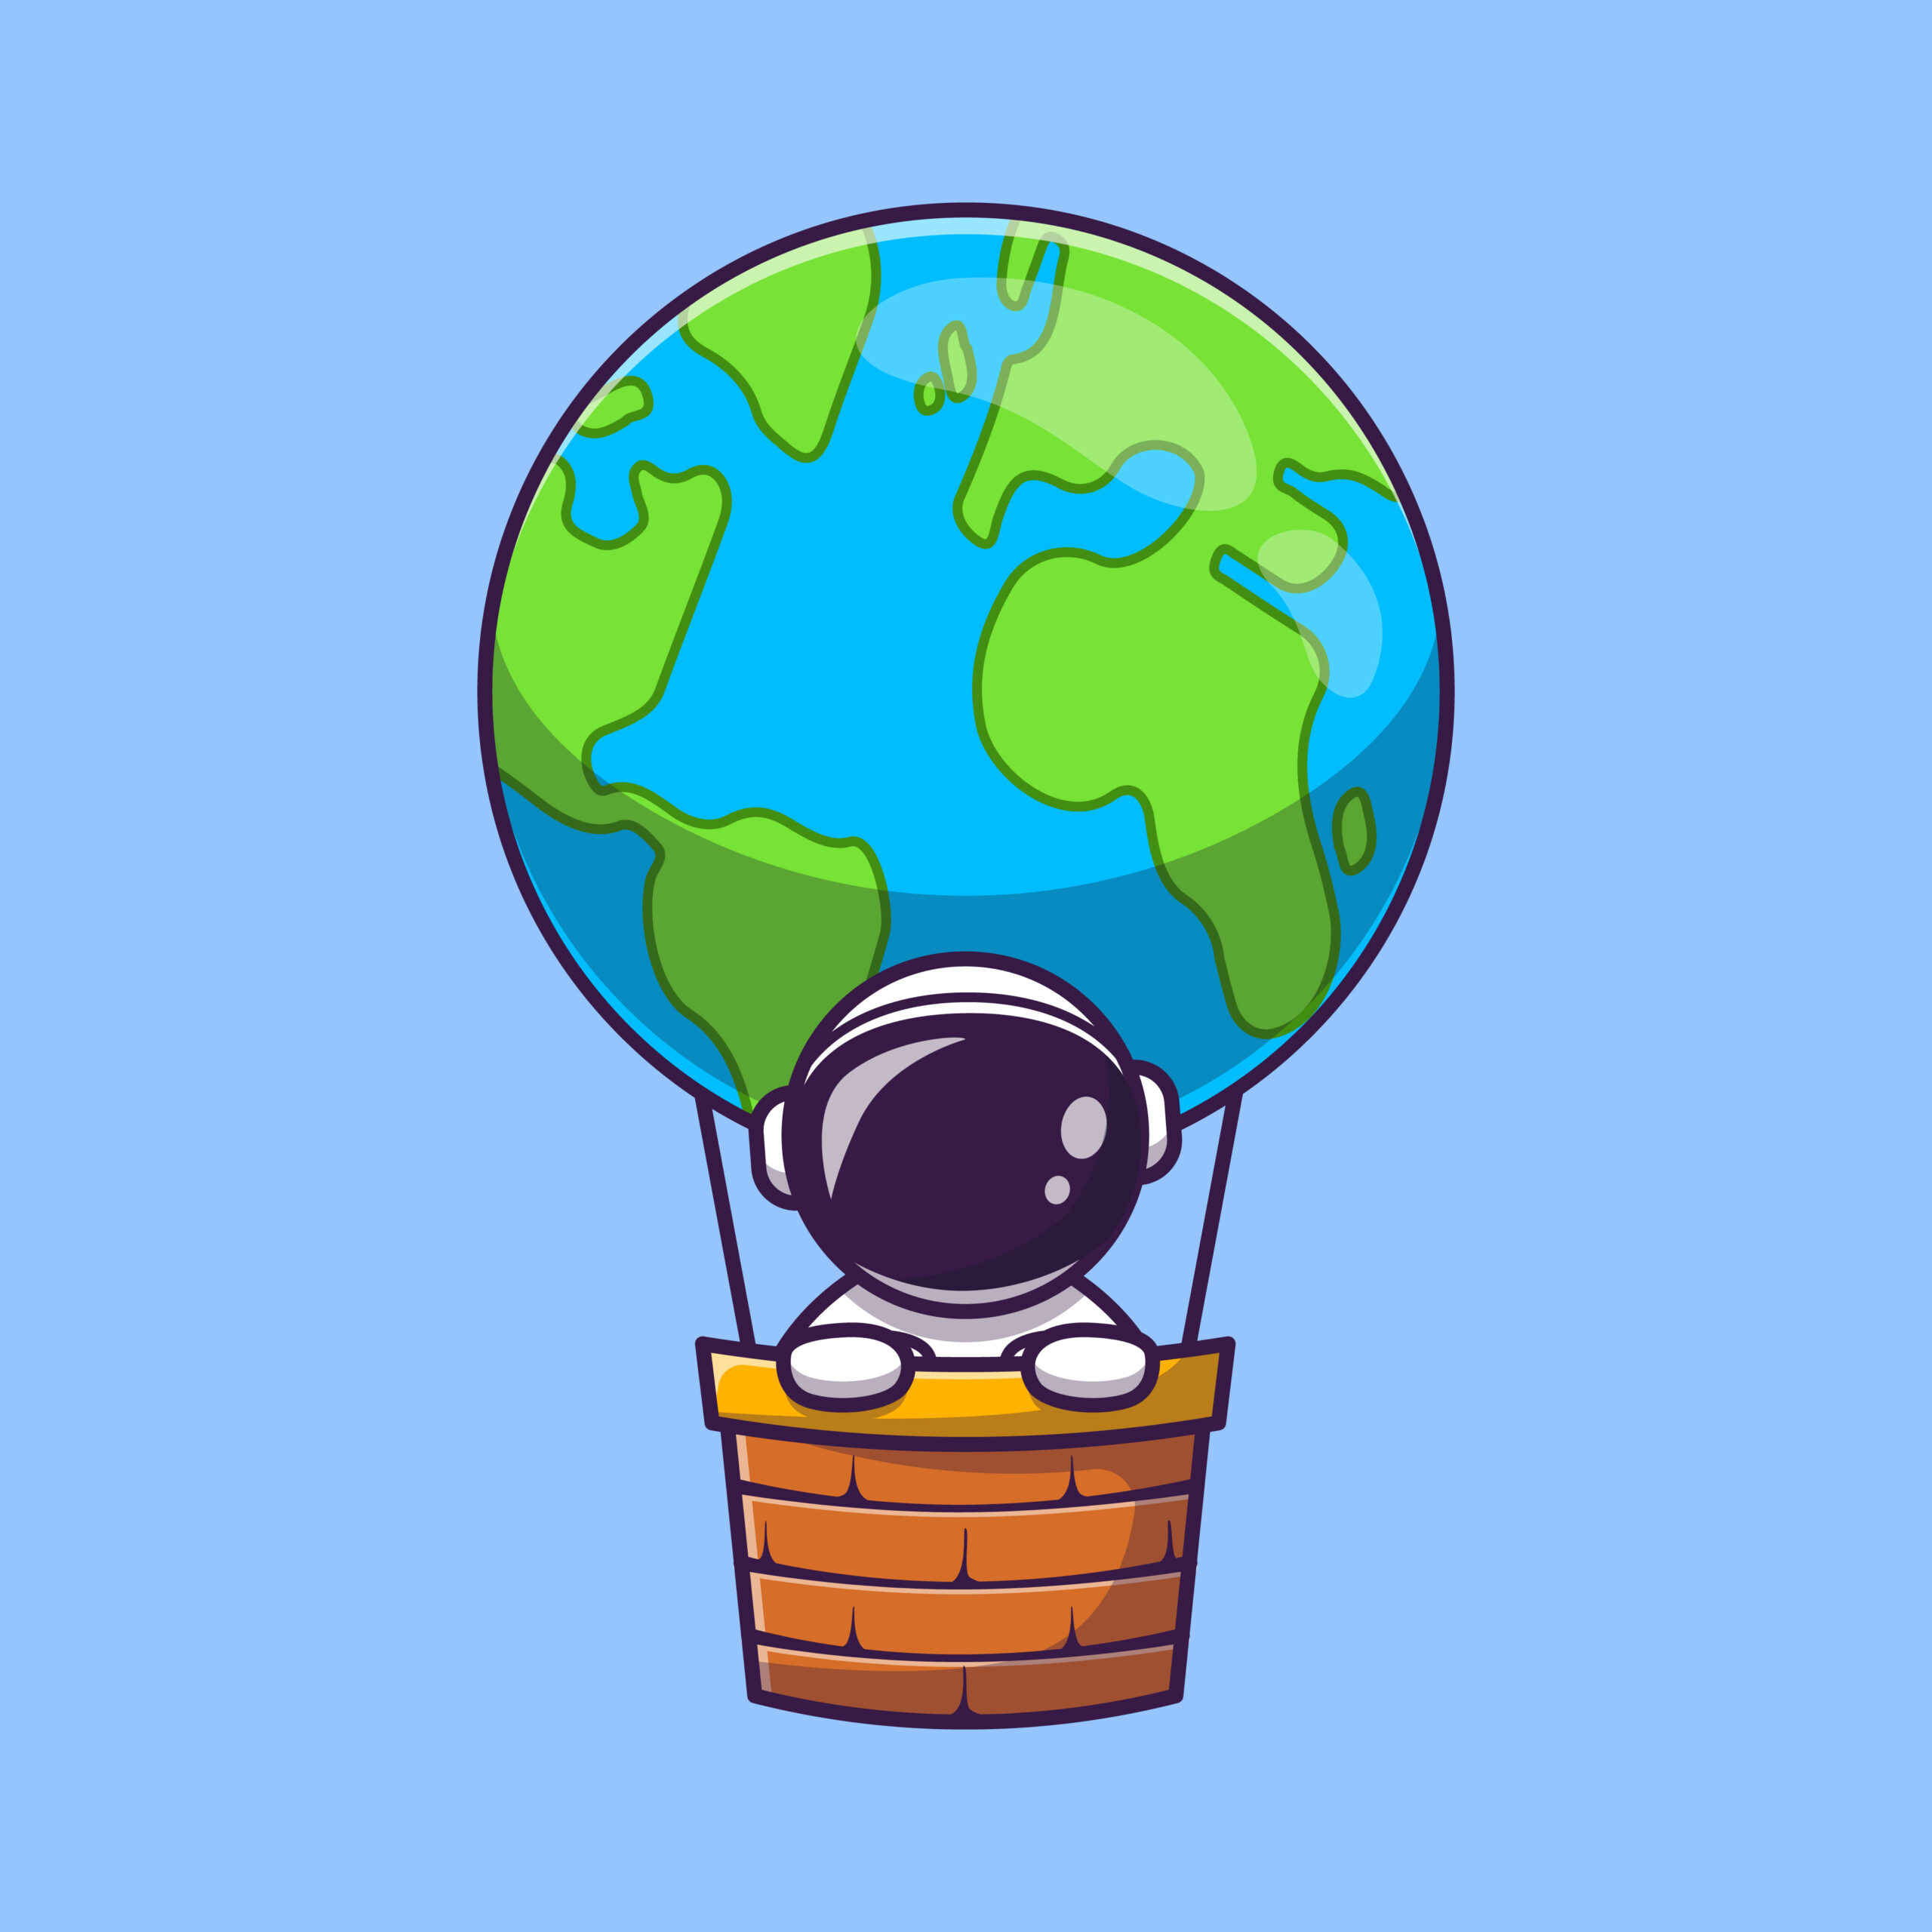 Cute Astronaut In Hot Air Balloon Earth Cartoon Vector Illustration